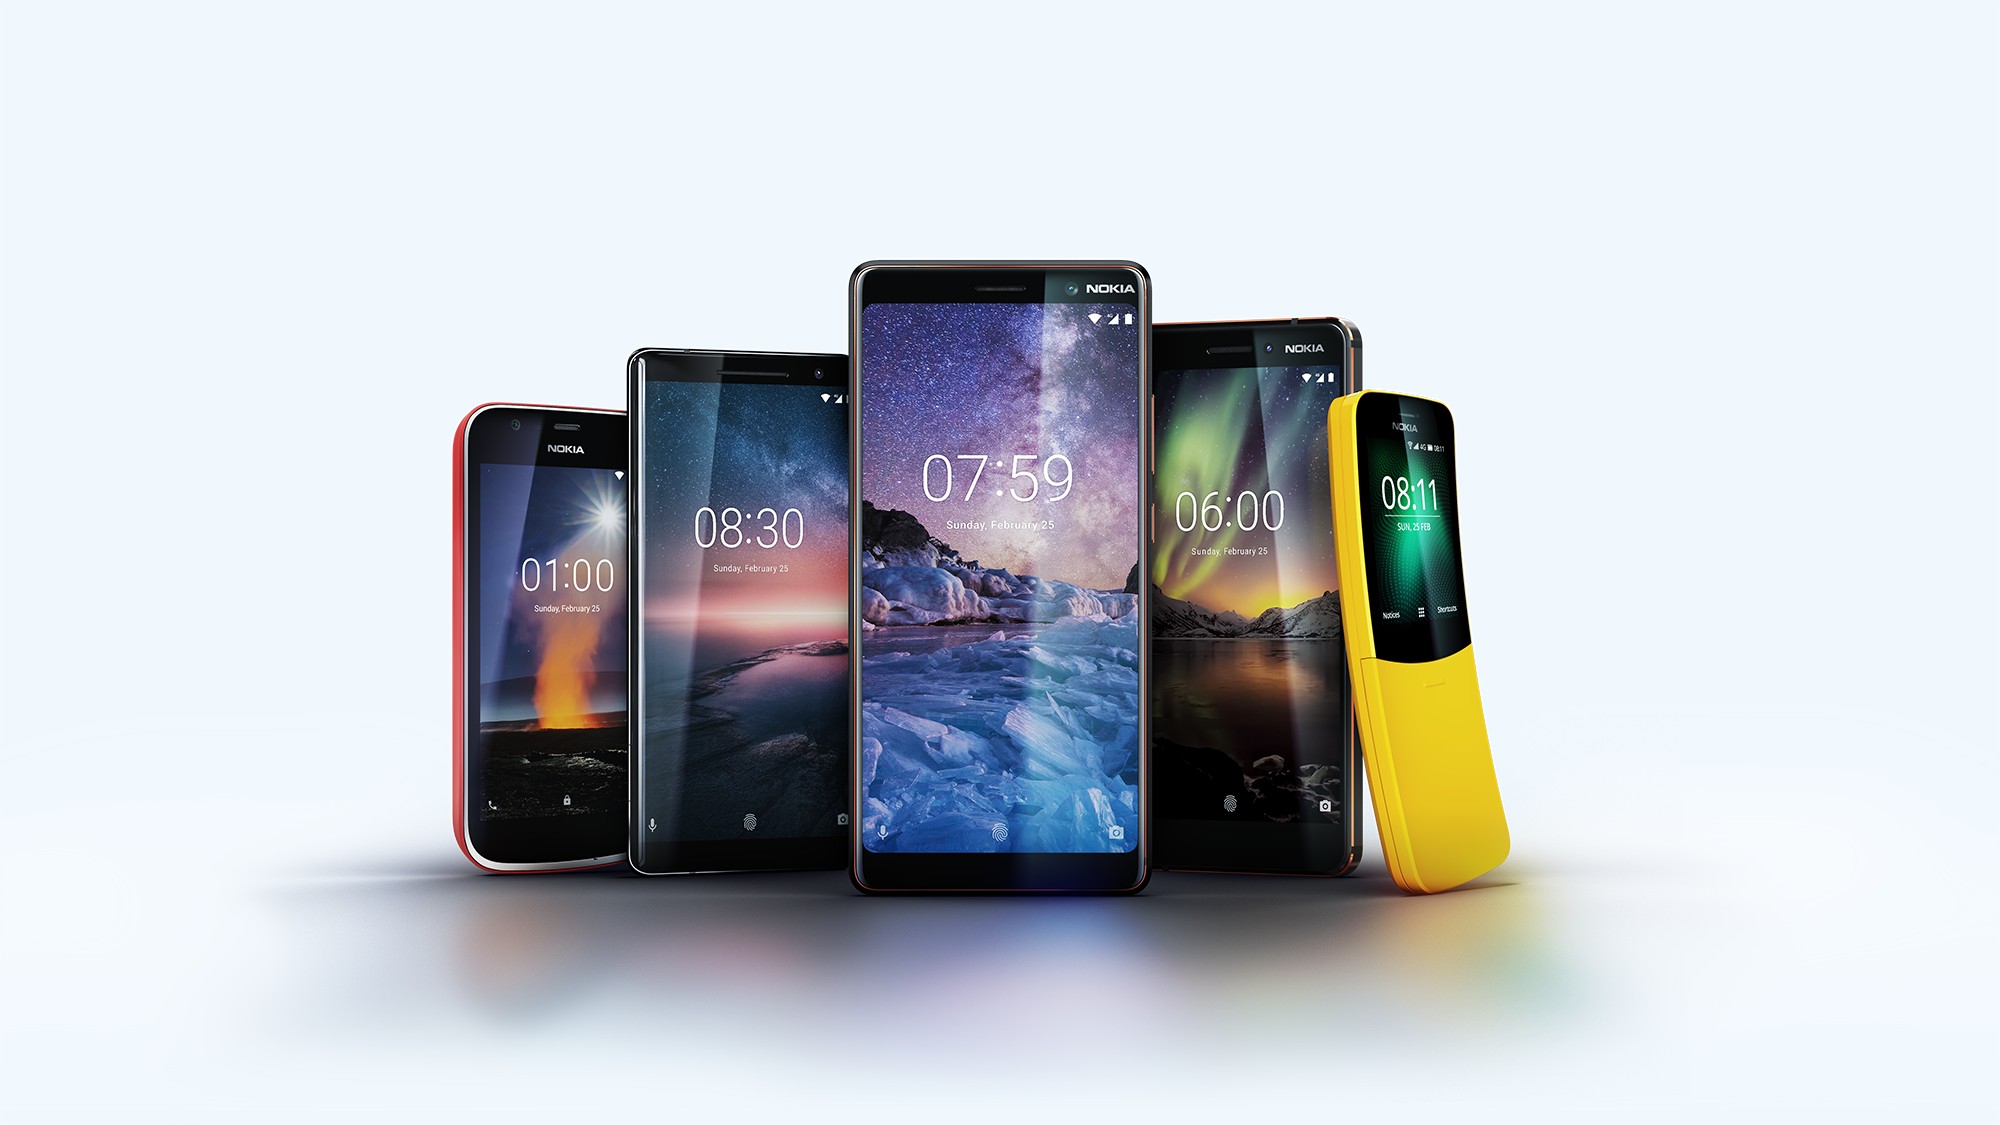 The Nokia lineup